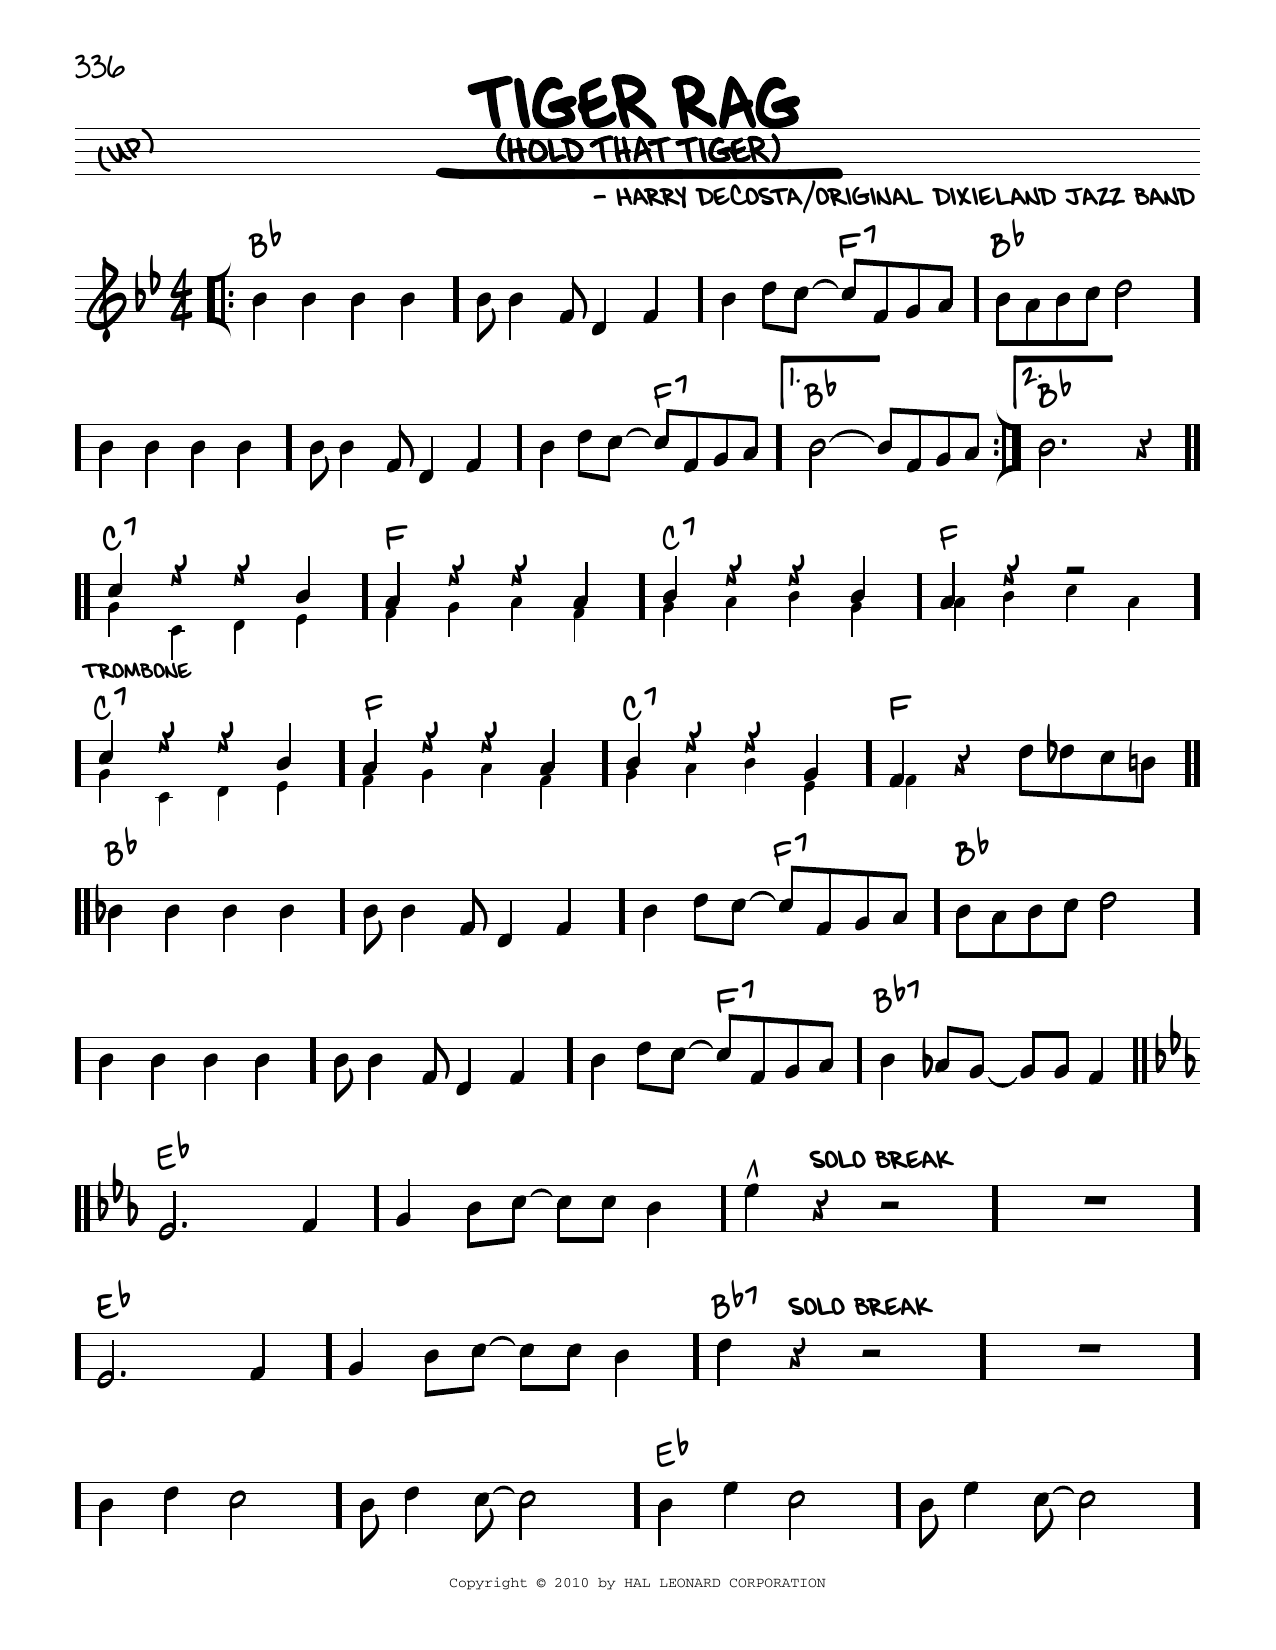 Original Dixieland Jazz Band Tiger Rag (Hold That Tiger) (arr. Robert Rawlins) Sheet Music Notes & Chords for Real Book – Melody, Lyrics & Chords - Download or Print PDF